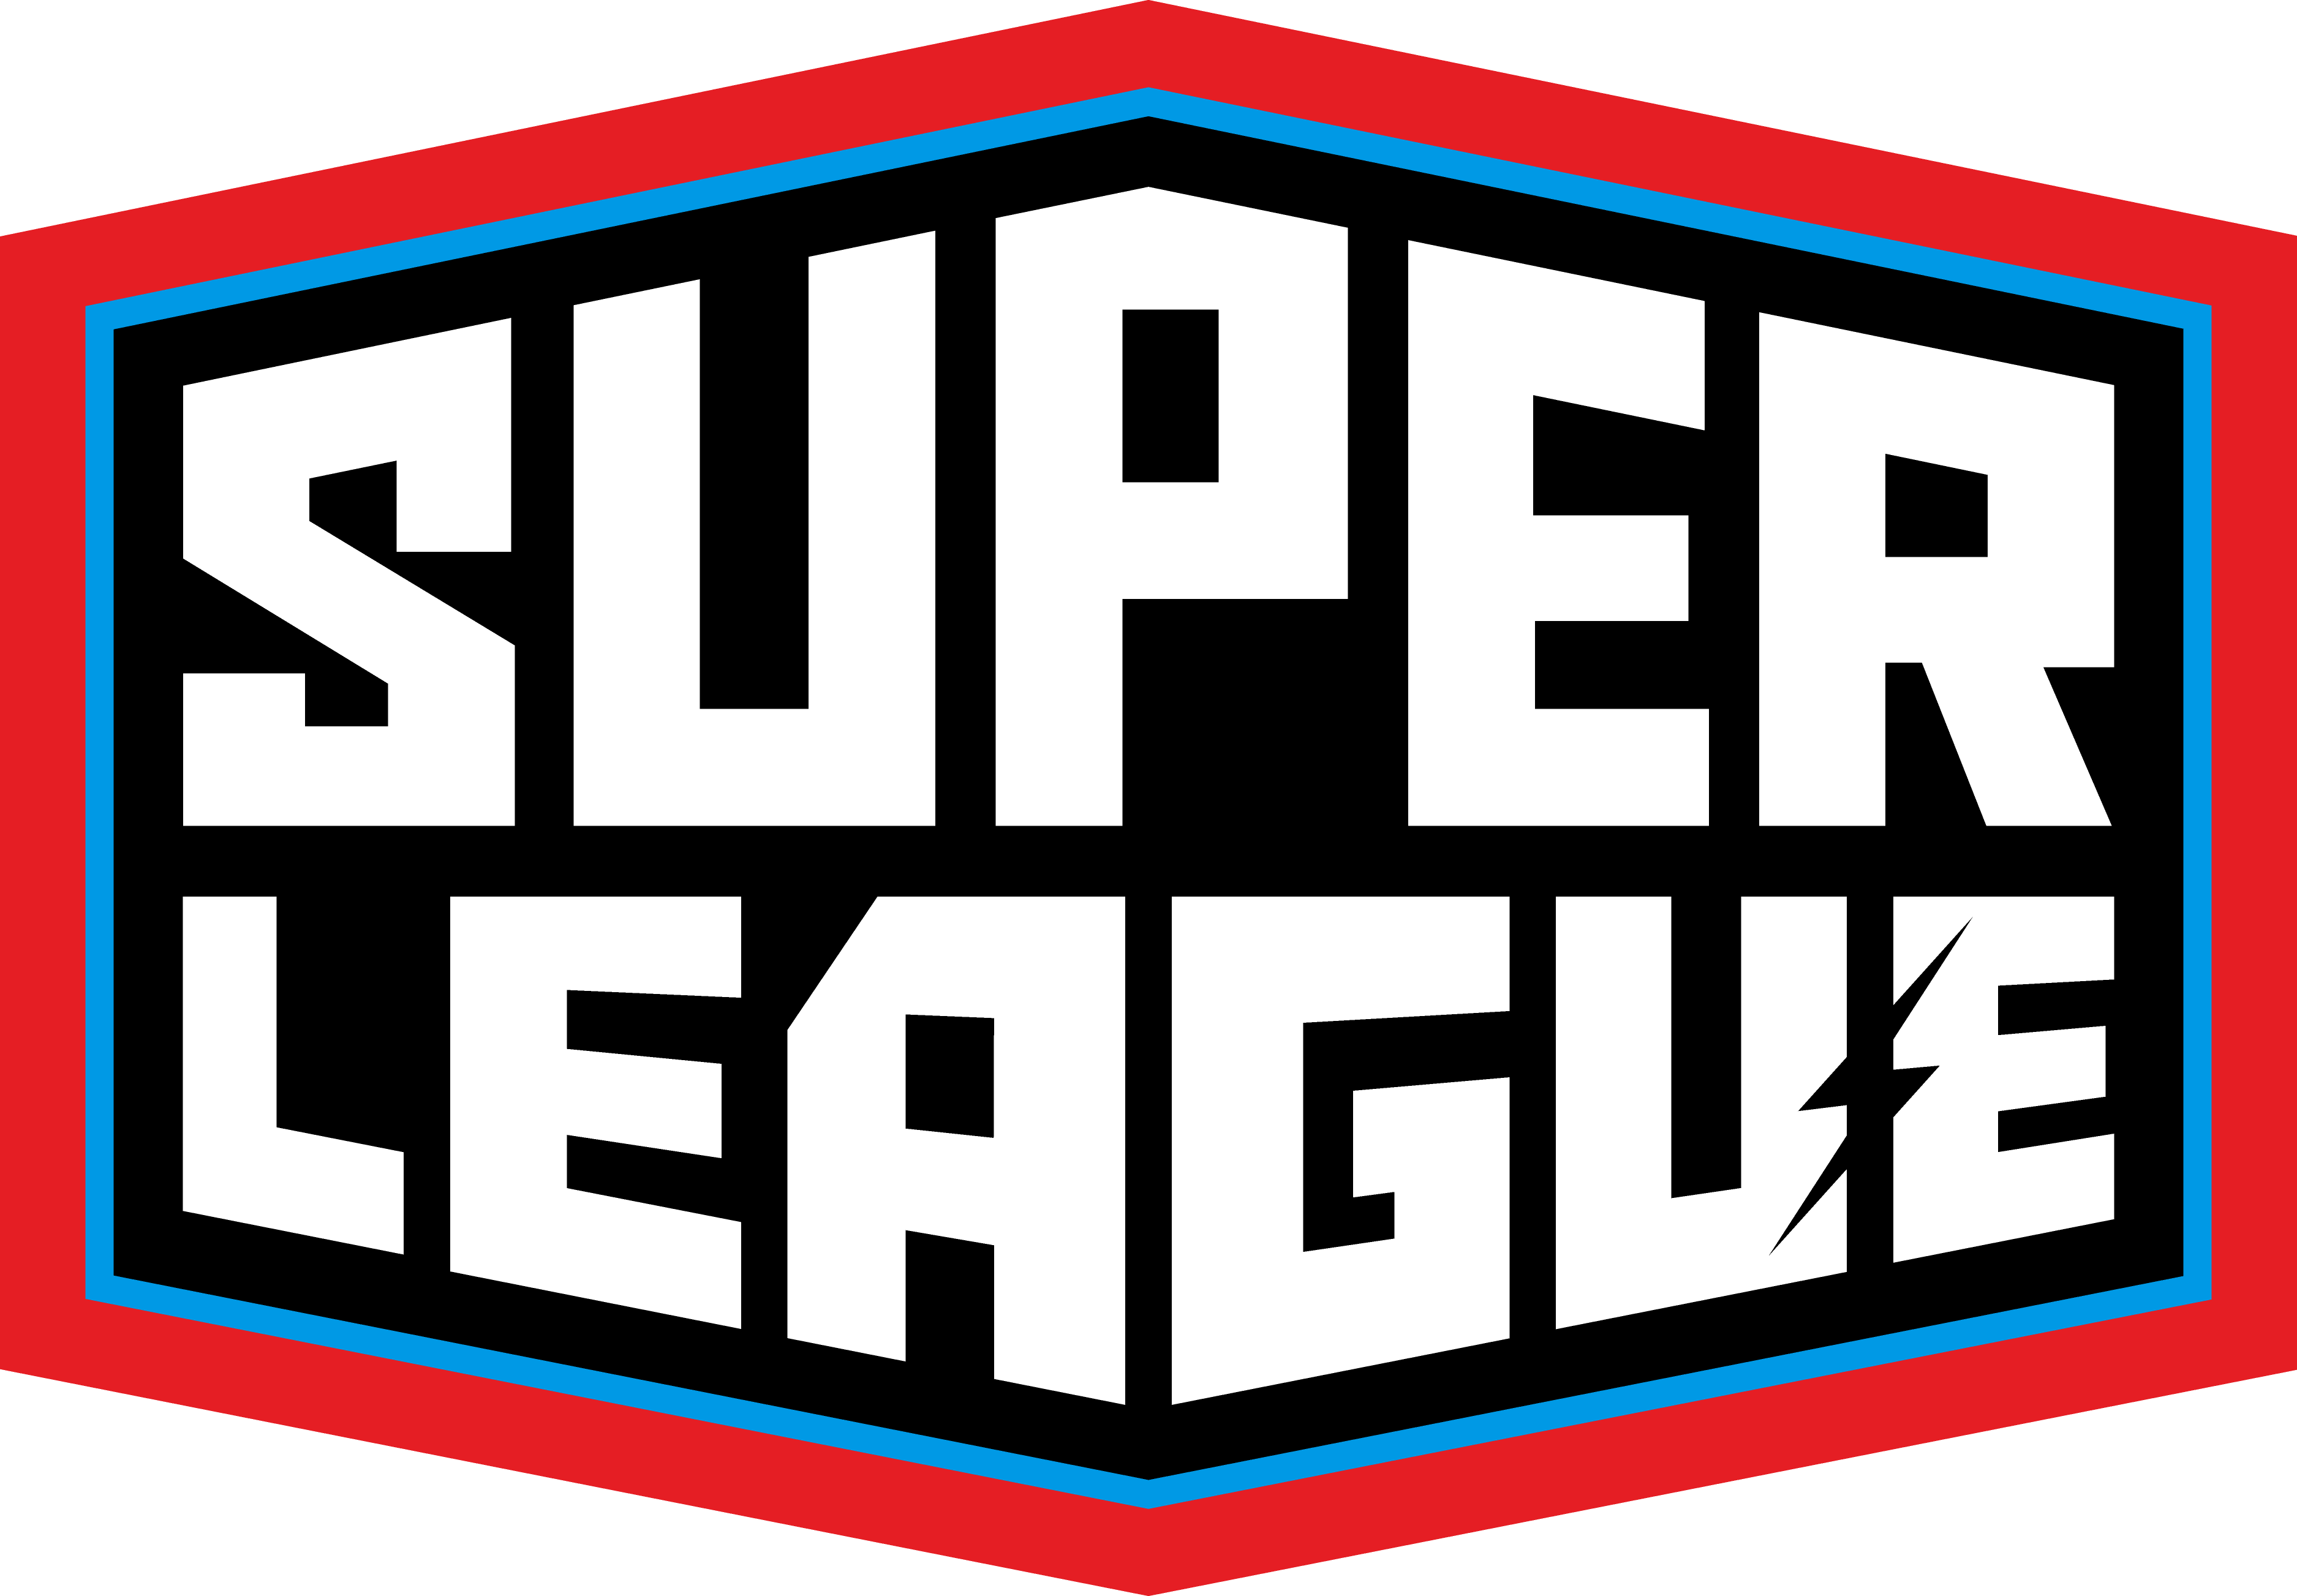 Super League Gaming